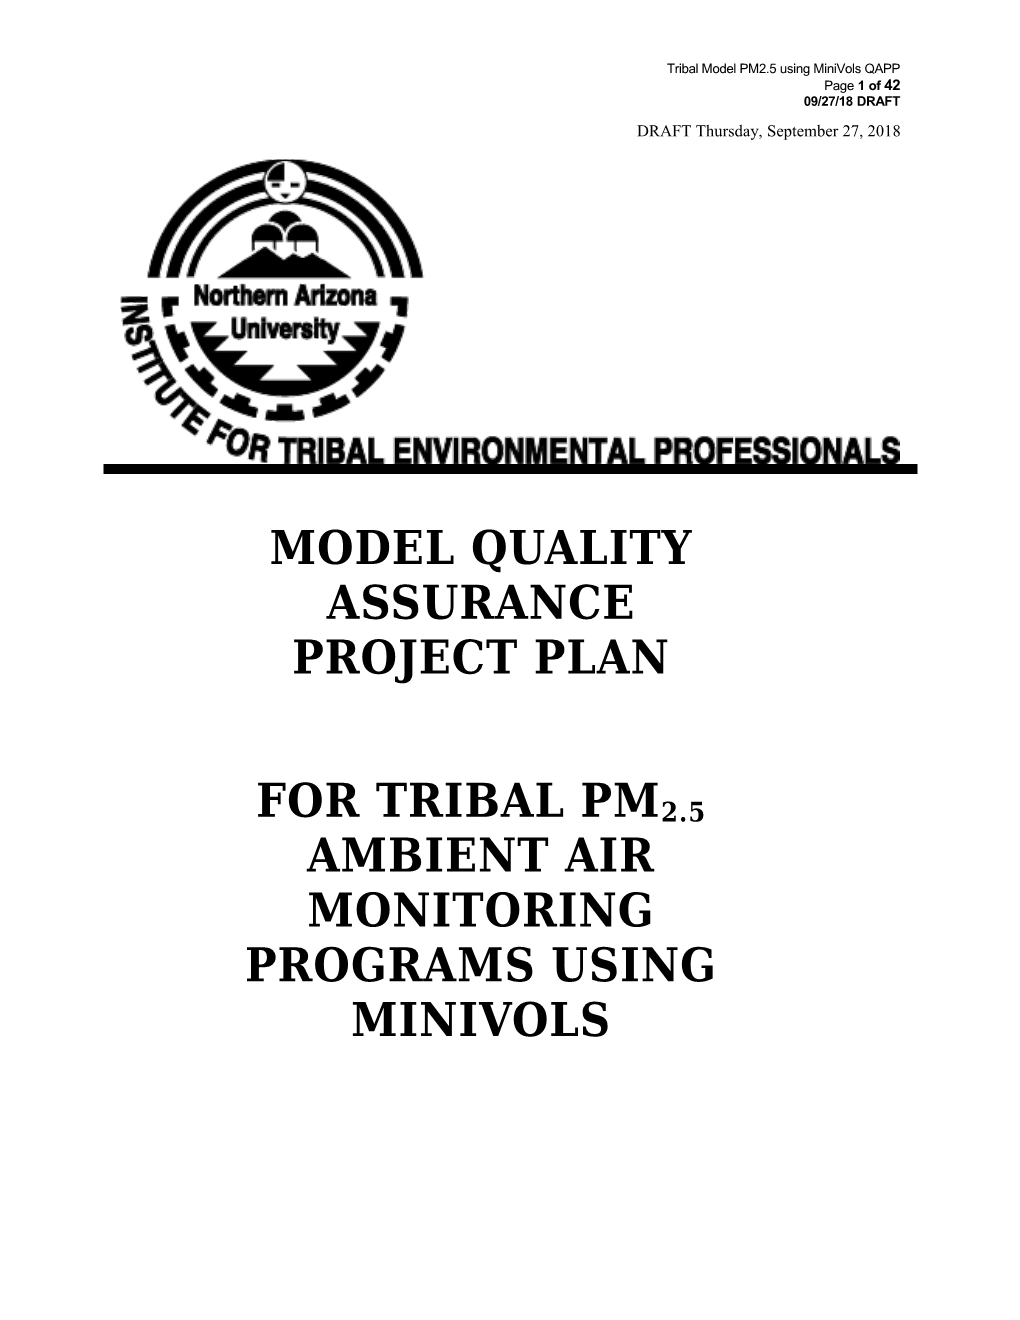 For Tribal PM2.5 Ambient Air Monitoring Programs USING MINIVOLS